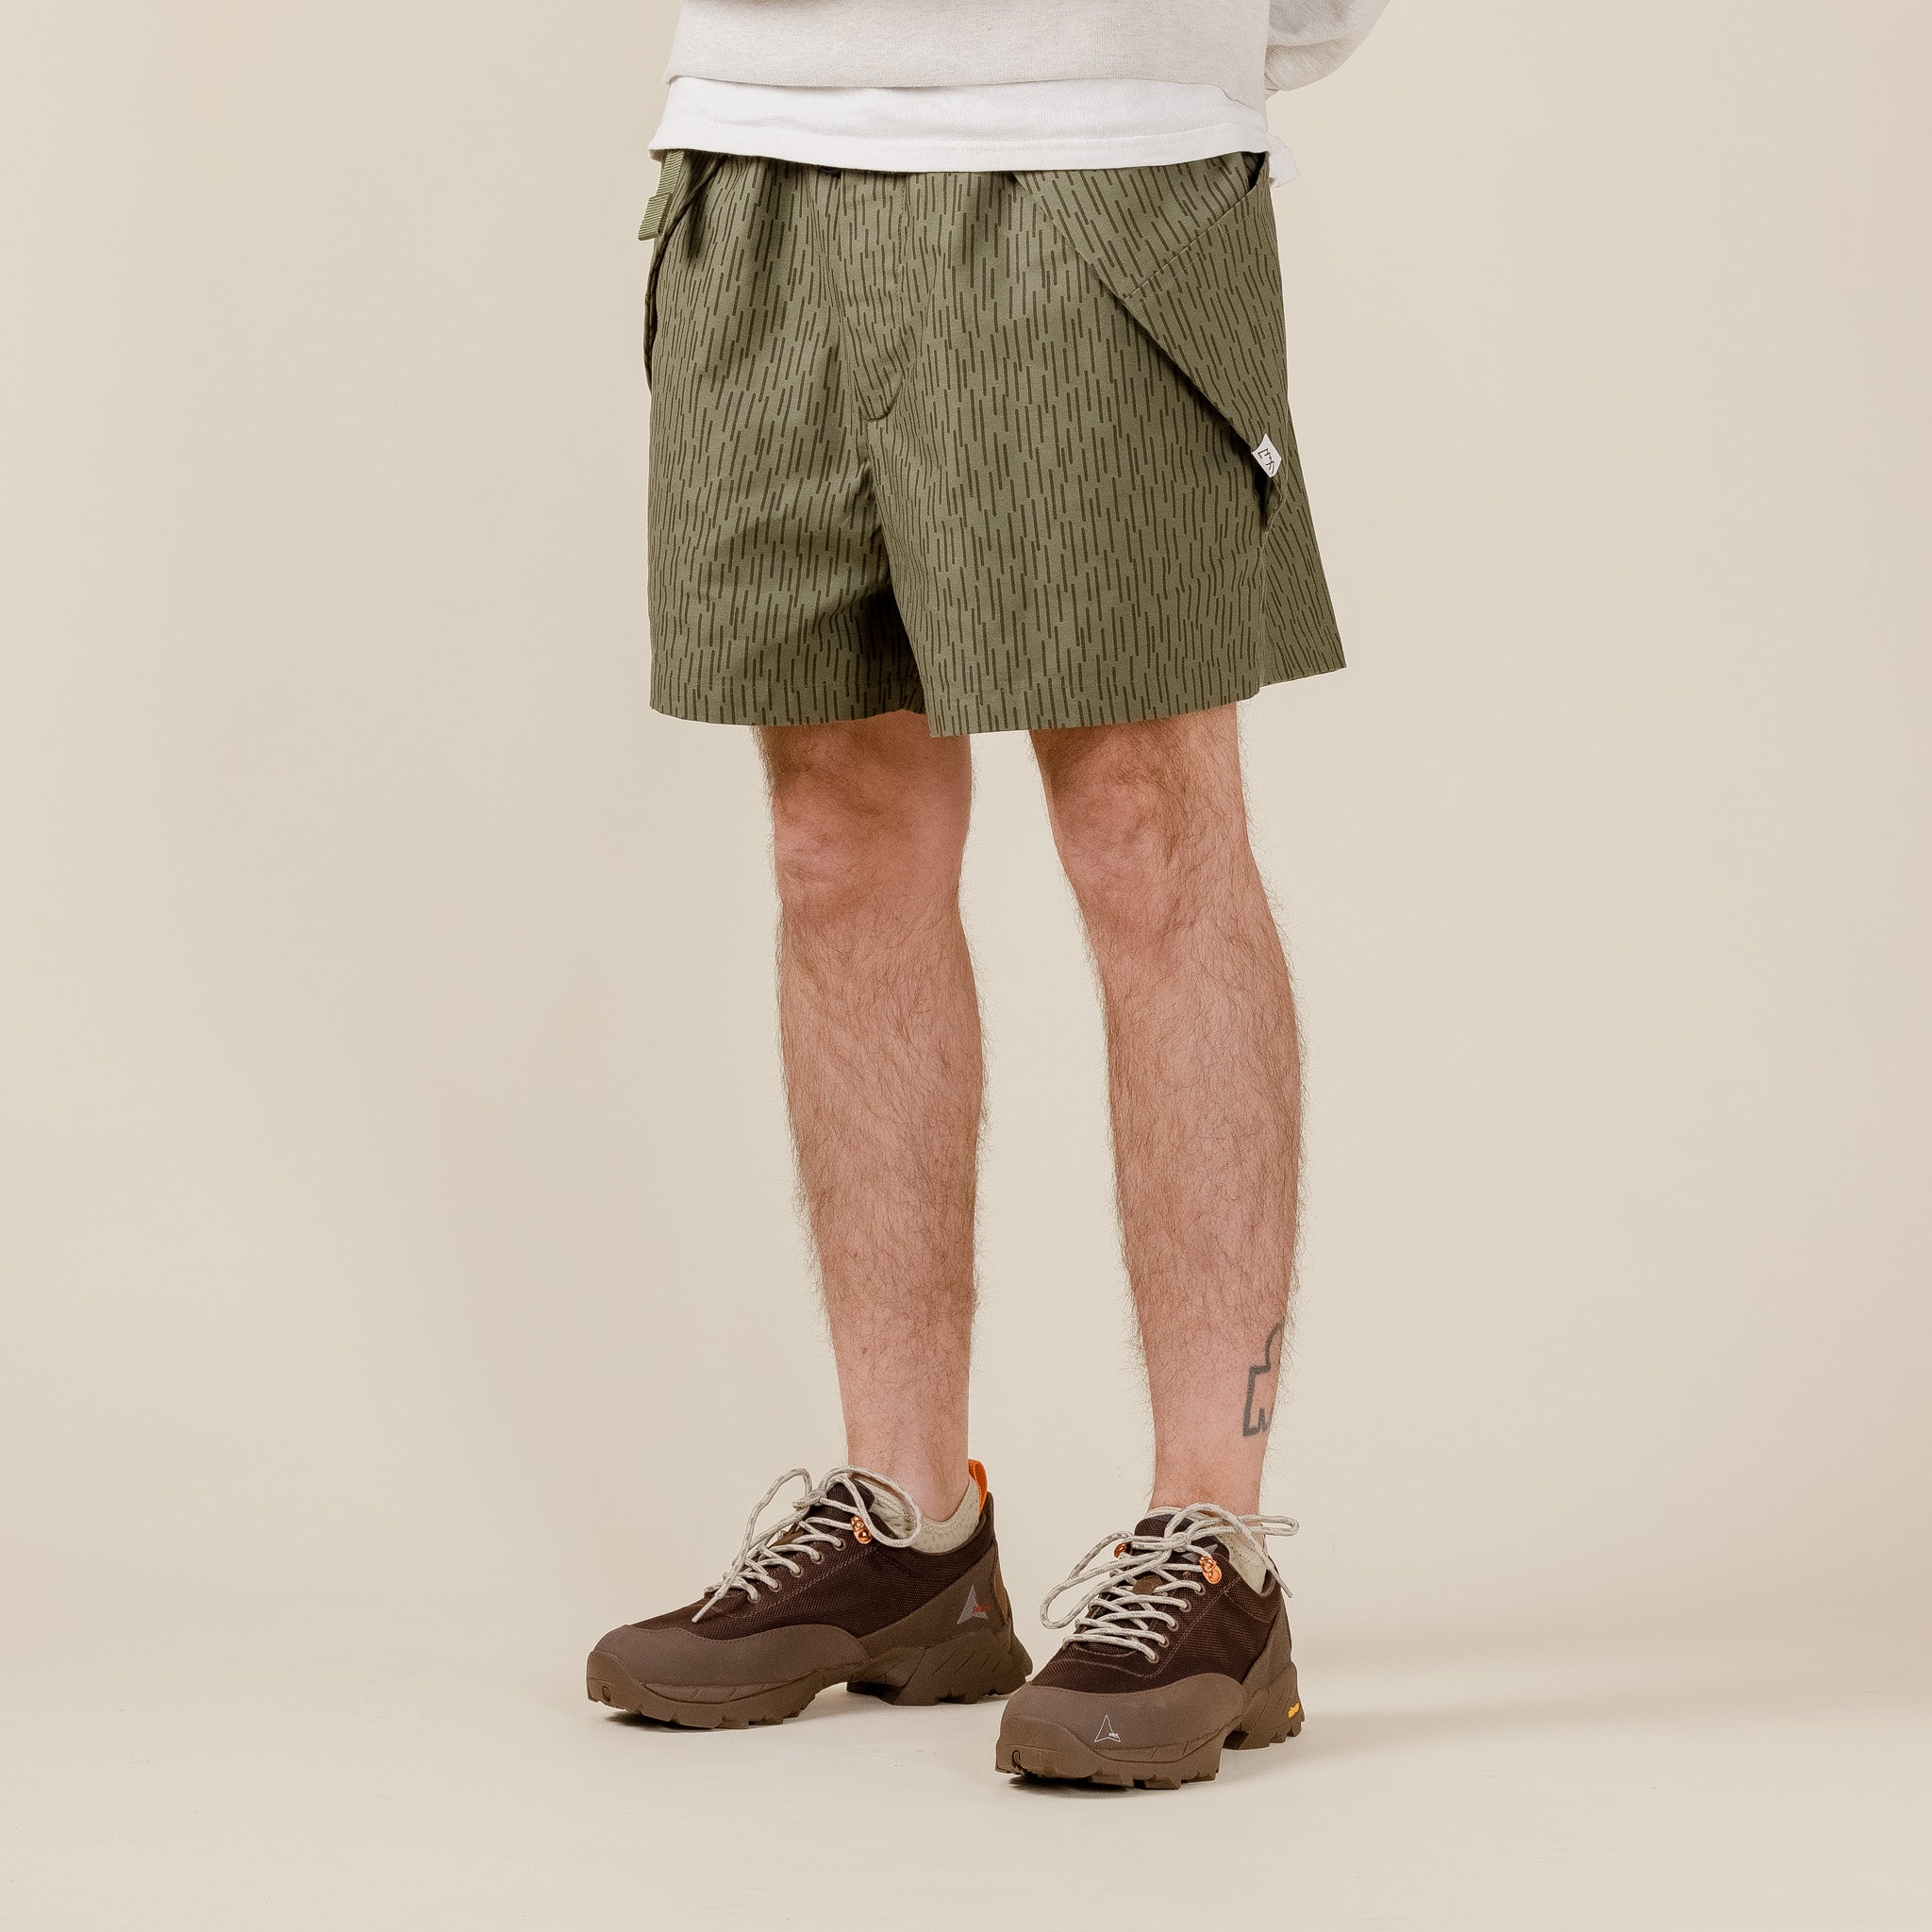 CMF Comfy Outdoor Garment - M65 Shorts Rain Camo - Khaki | T.T.O.O